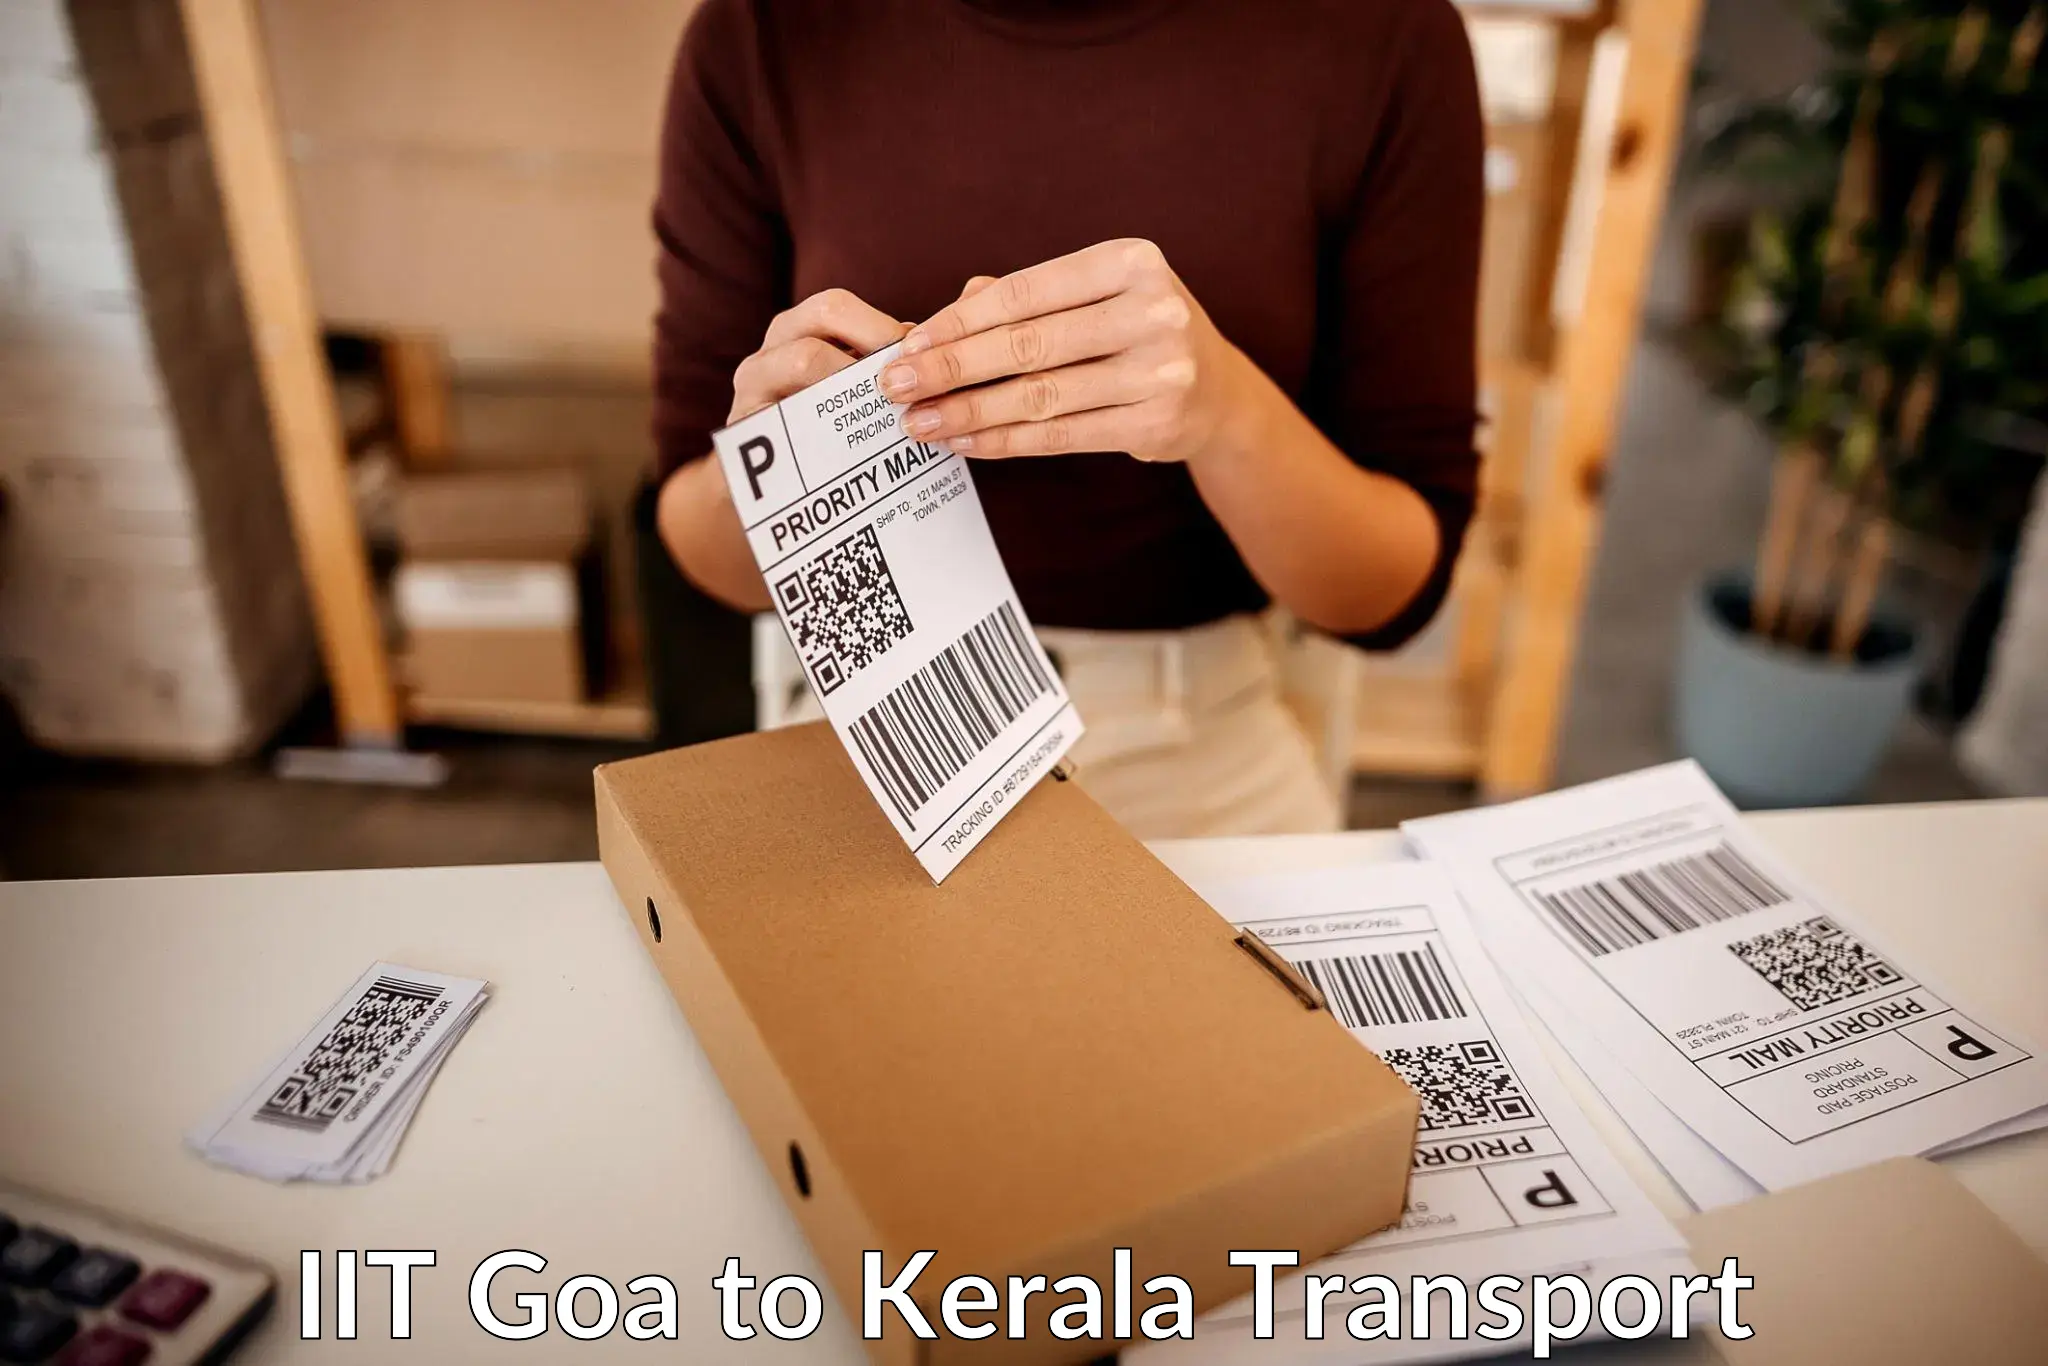 Bike shipping service IIT Goa to Trivandrum